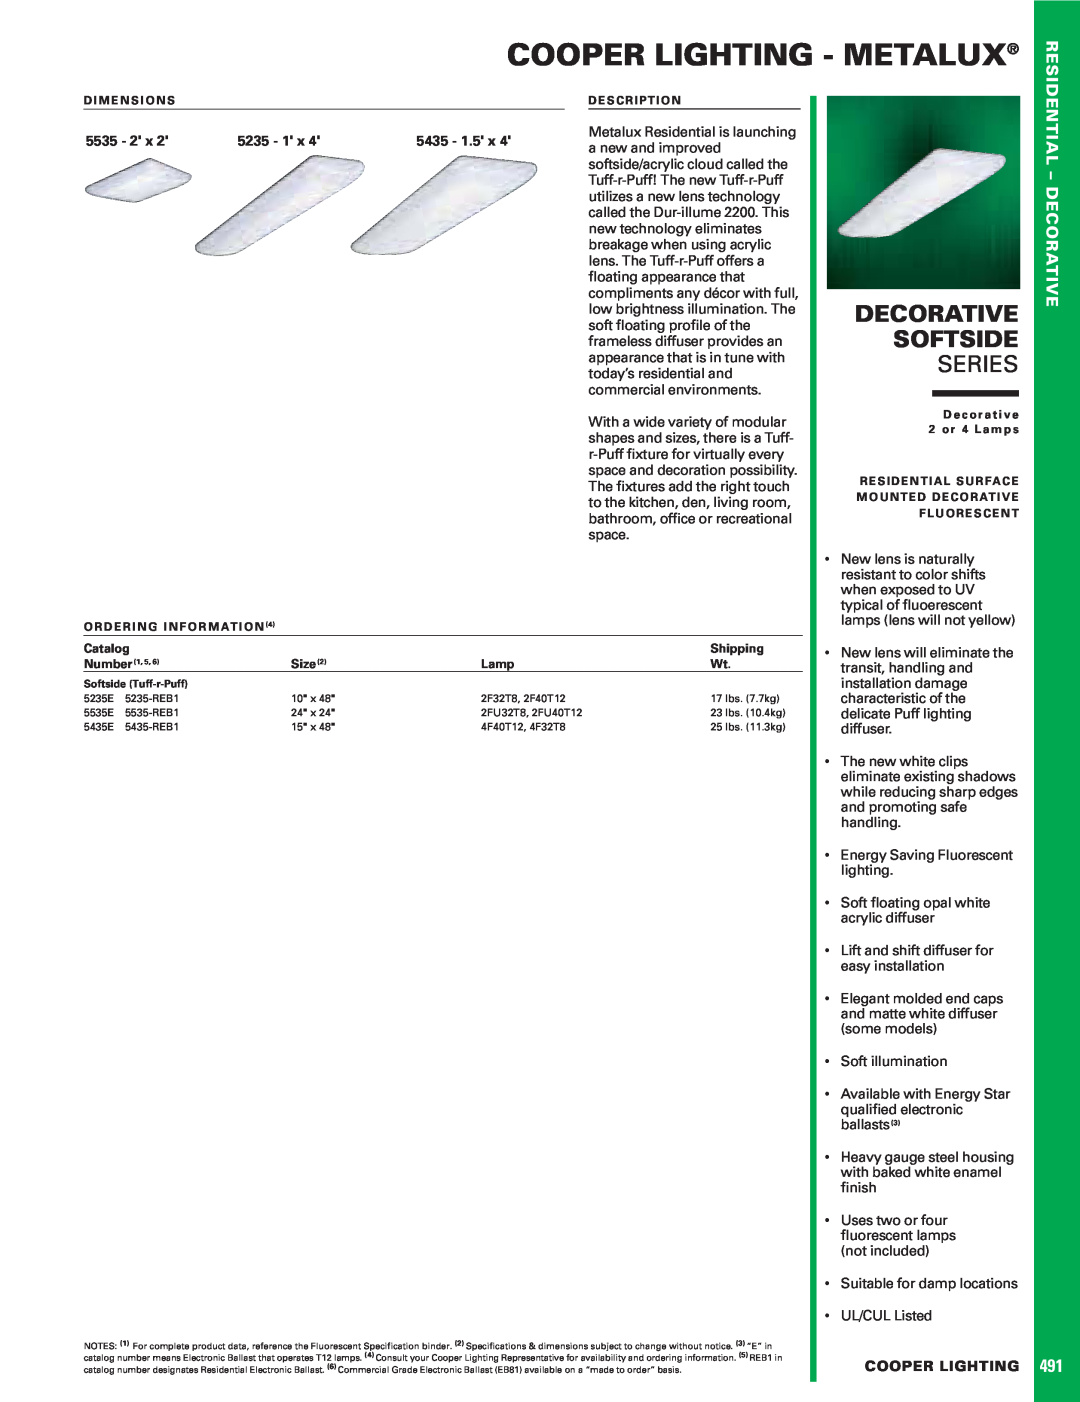 Cooper Lighting 491 specifications Cooper Lighting - Metalux, Decorative Softside, Series, Residential - Decorative, 5535 